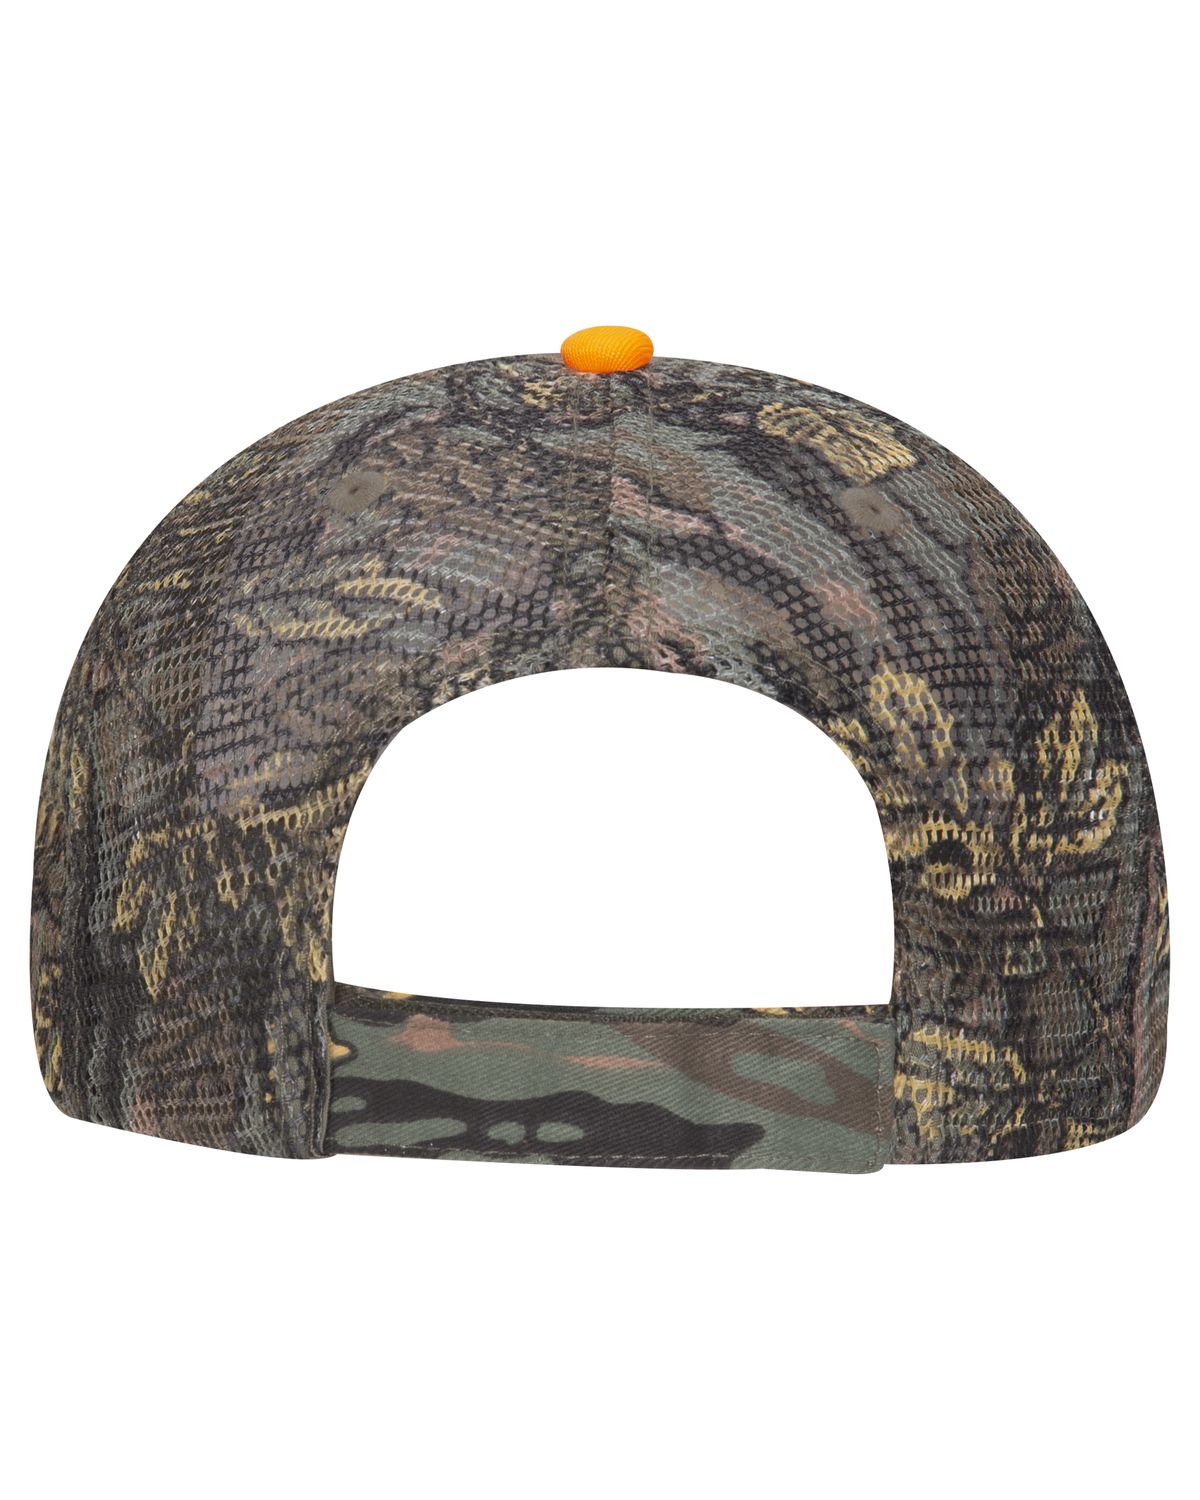 'OTTO 106 752 Otto cap camouflage 6 panel low profile mesh back trucker hat'